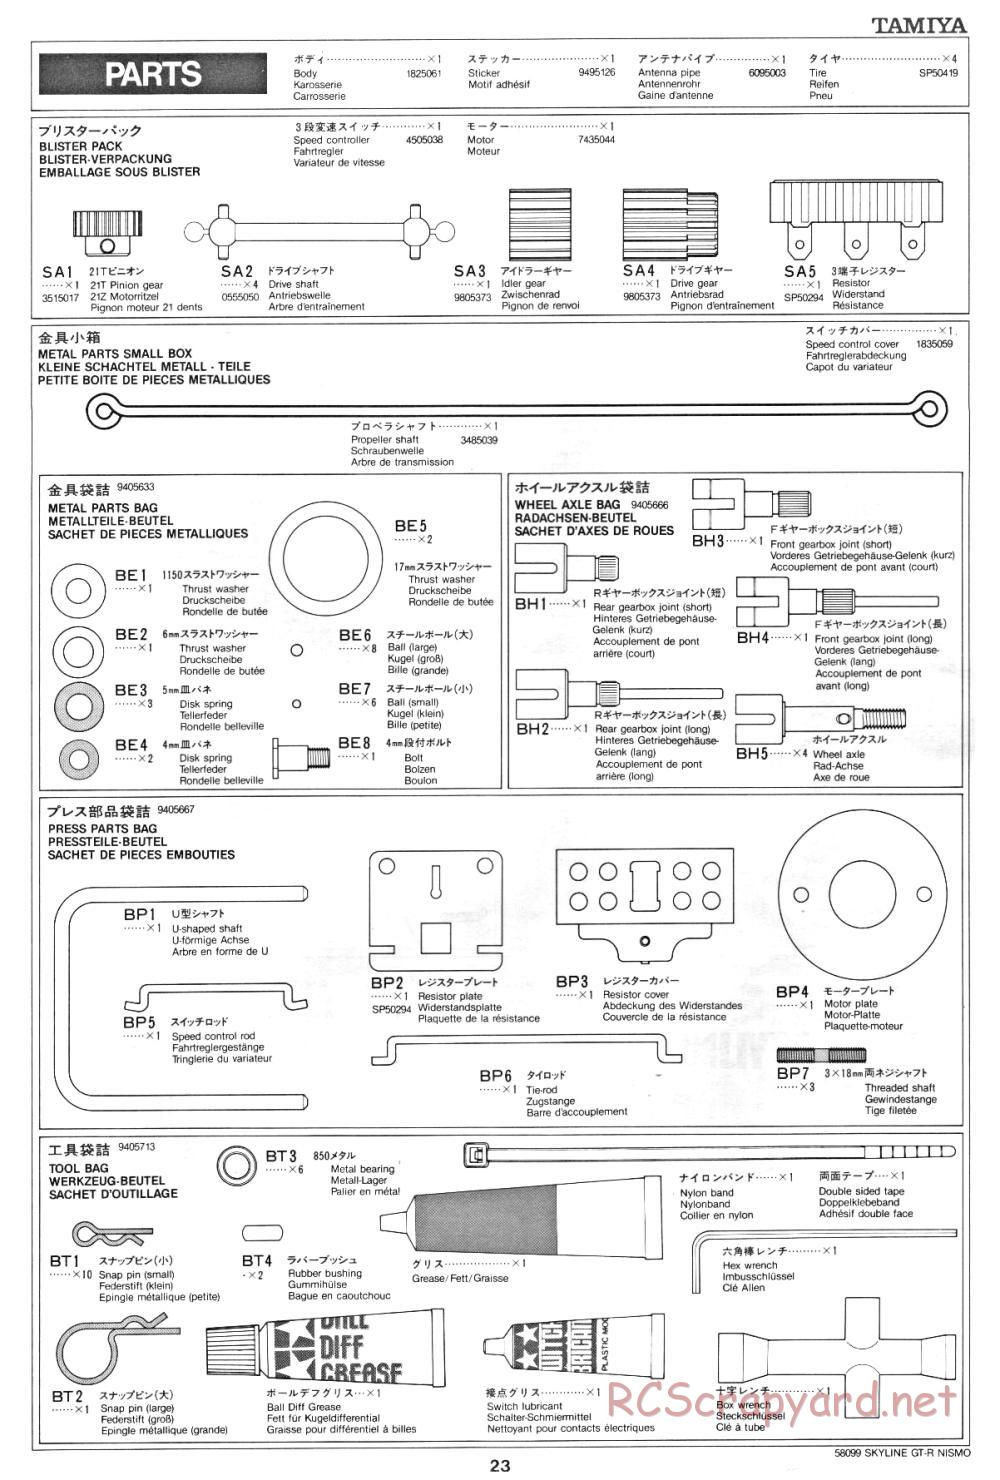 Tamiya - Nissan Skyline GT-R Nismo - 58099 - Manual - Page 23